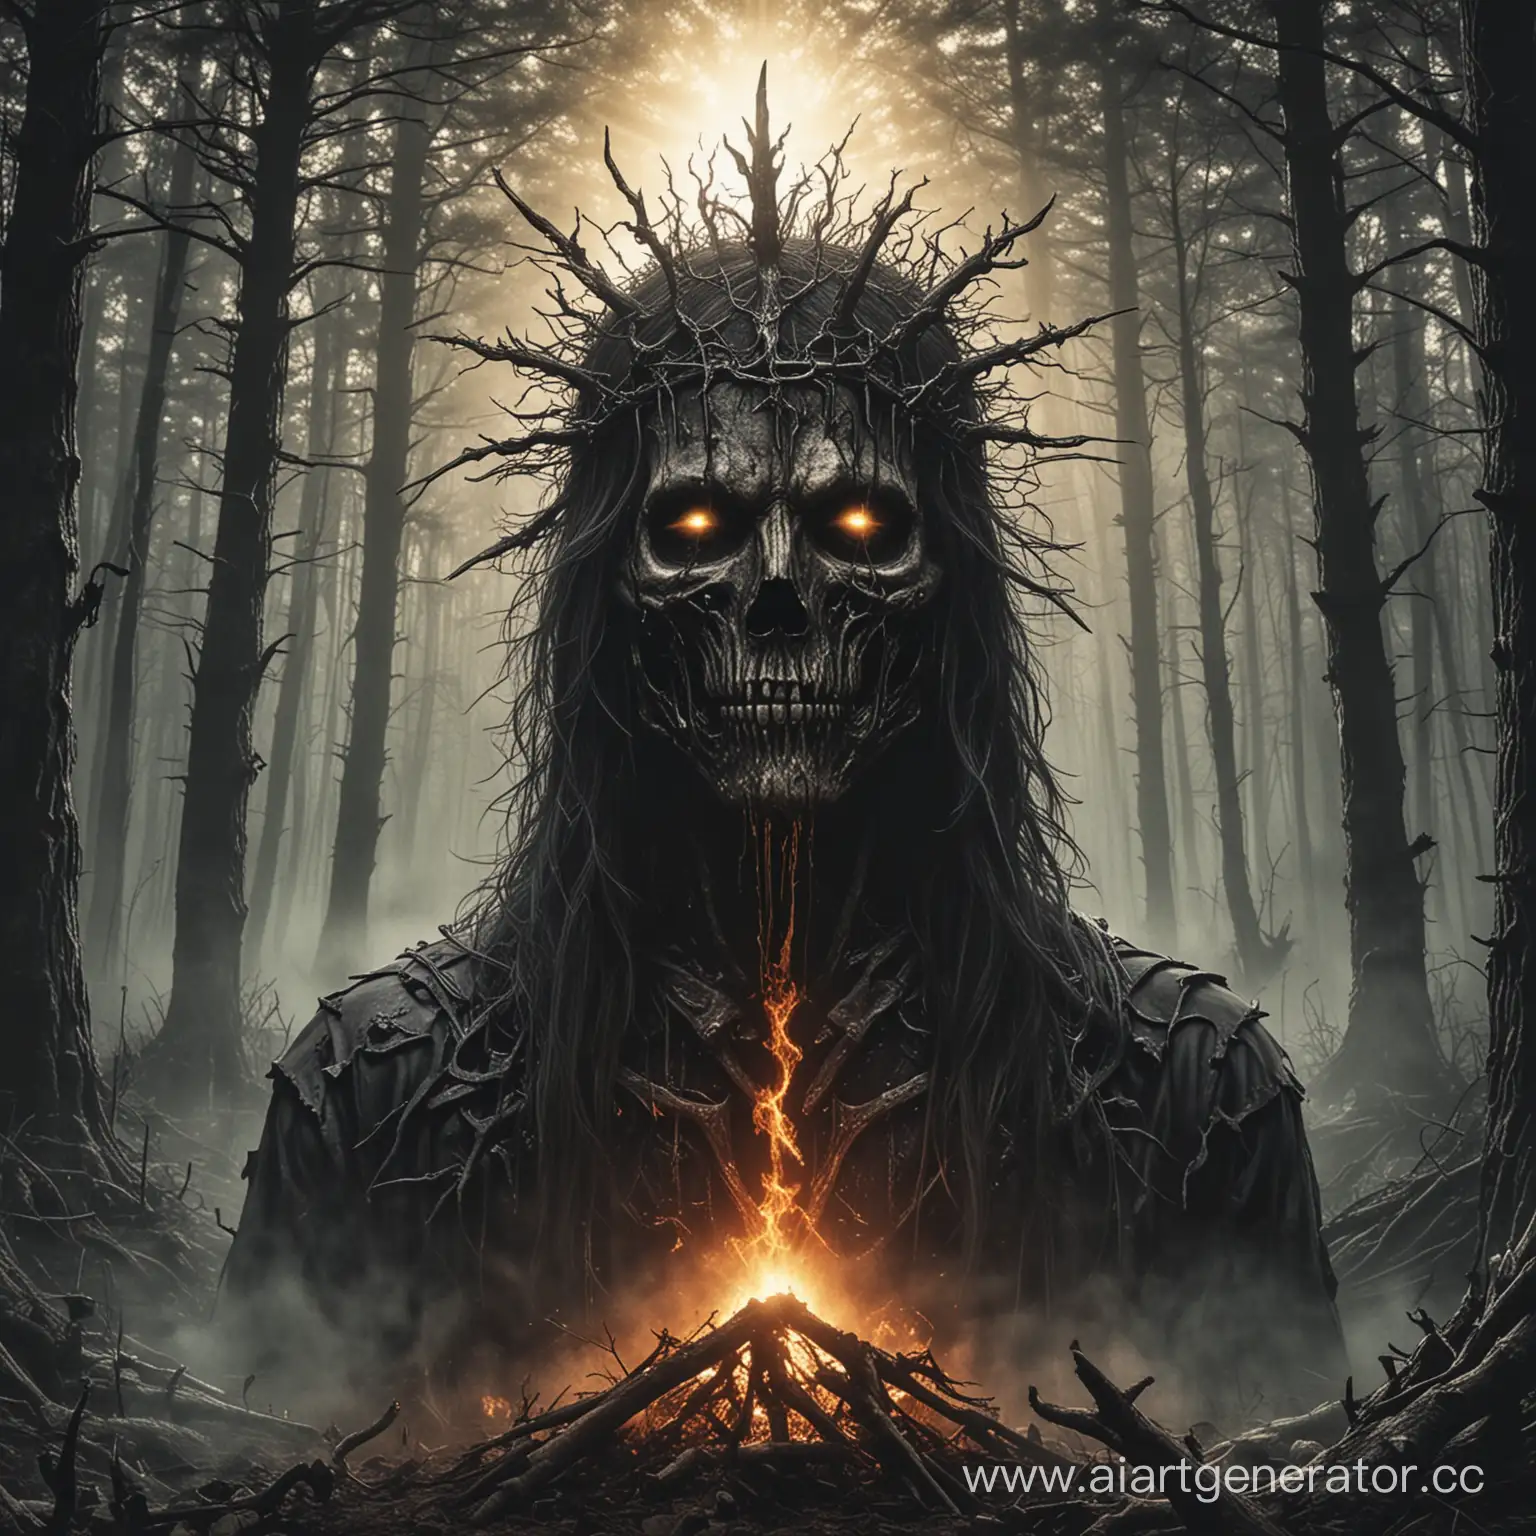 Black metalhead’s, forest, sun, corpse